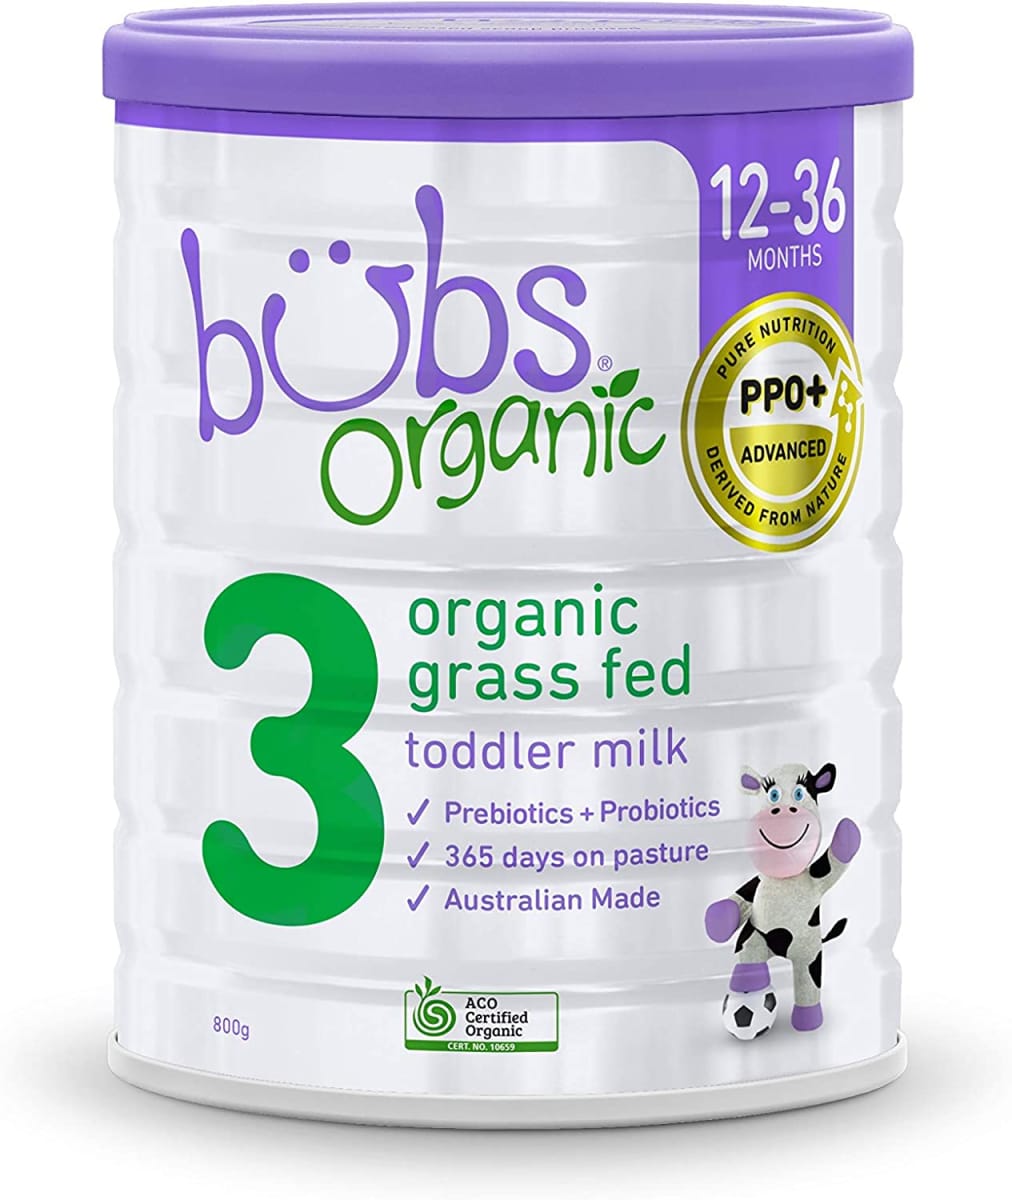 Organic Grass Fed Toddler Milk